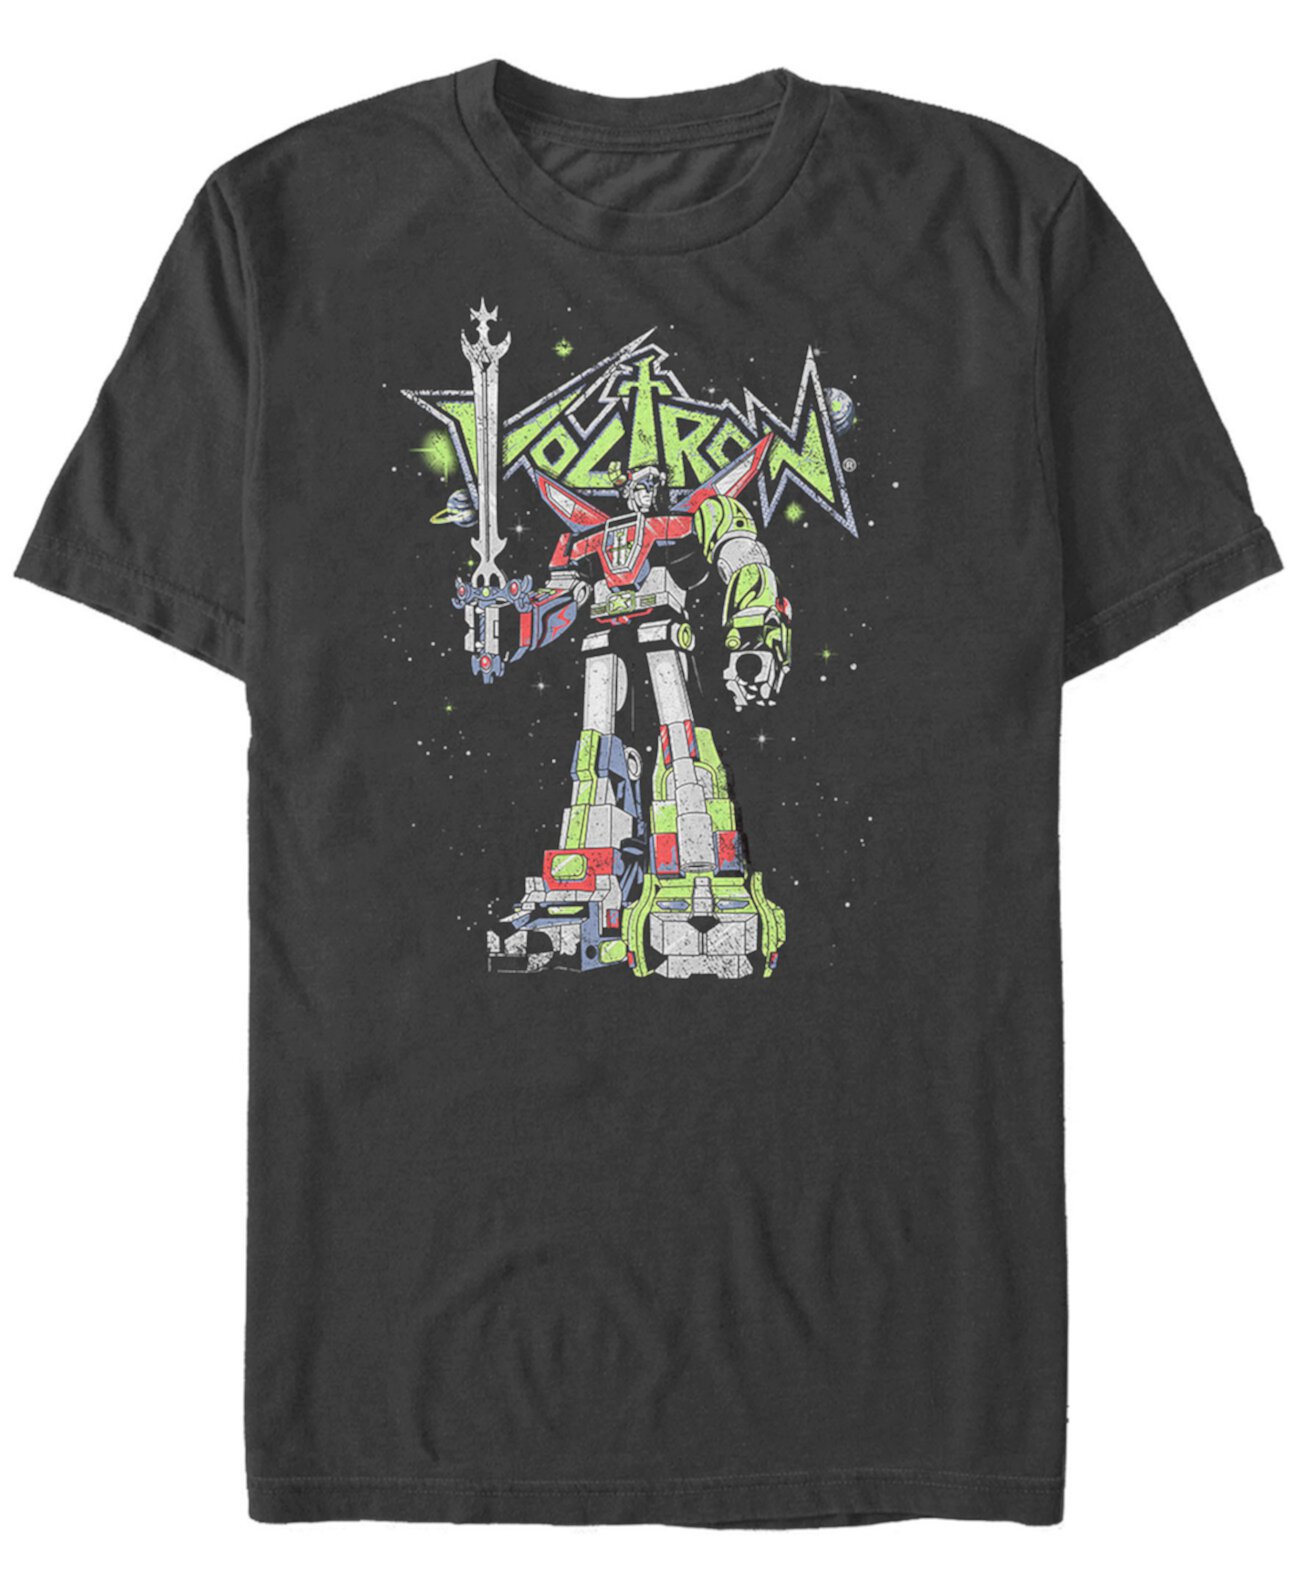 Мужская футболка с коротким рукавом с плакатом Voltron Defender of the Universe FIFTH SUN